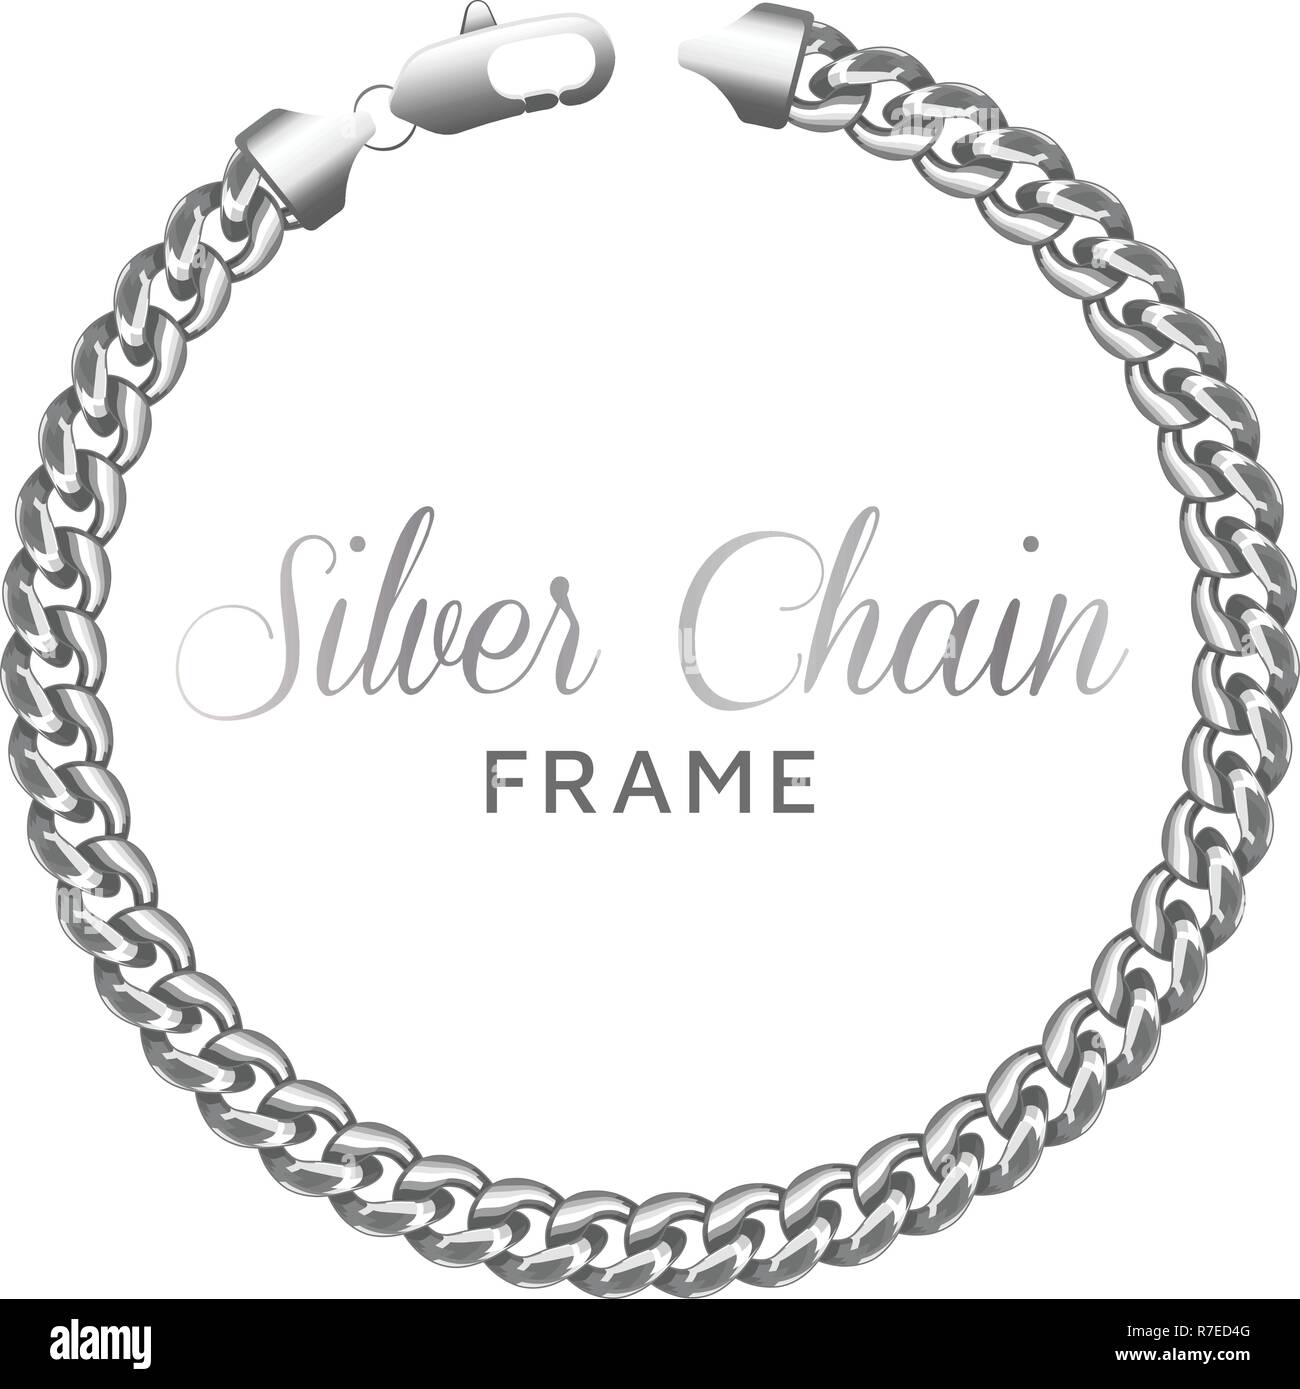 Silver chain round border frame. Stock Vector